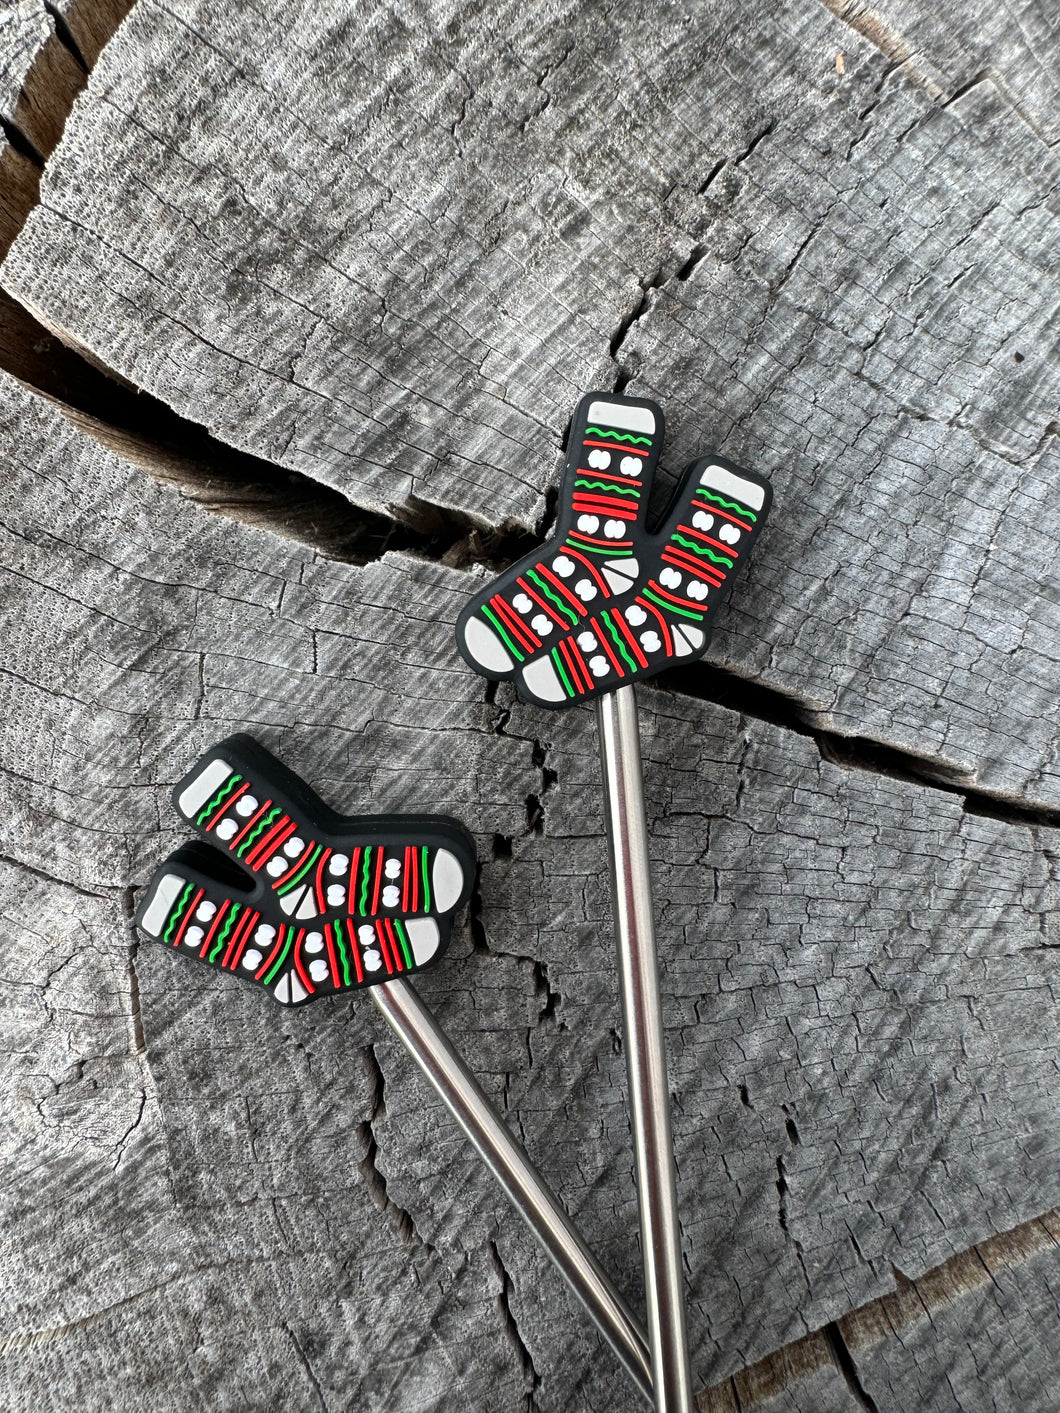 Christmas Socks Stitch Stoppers